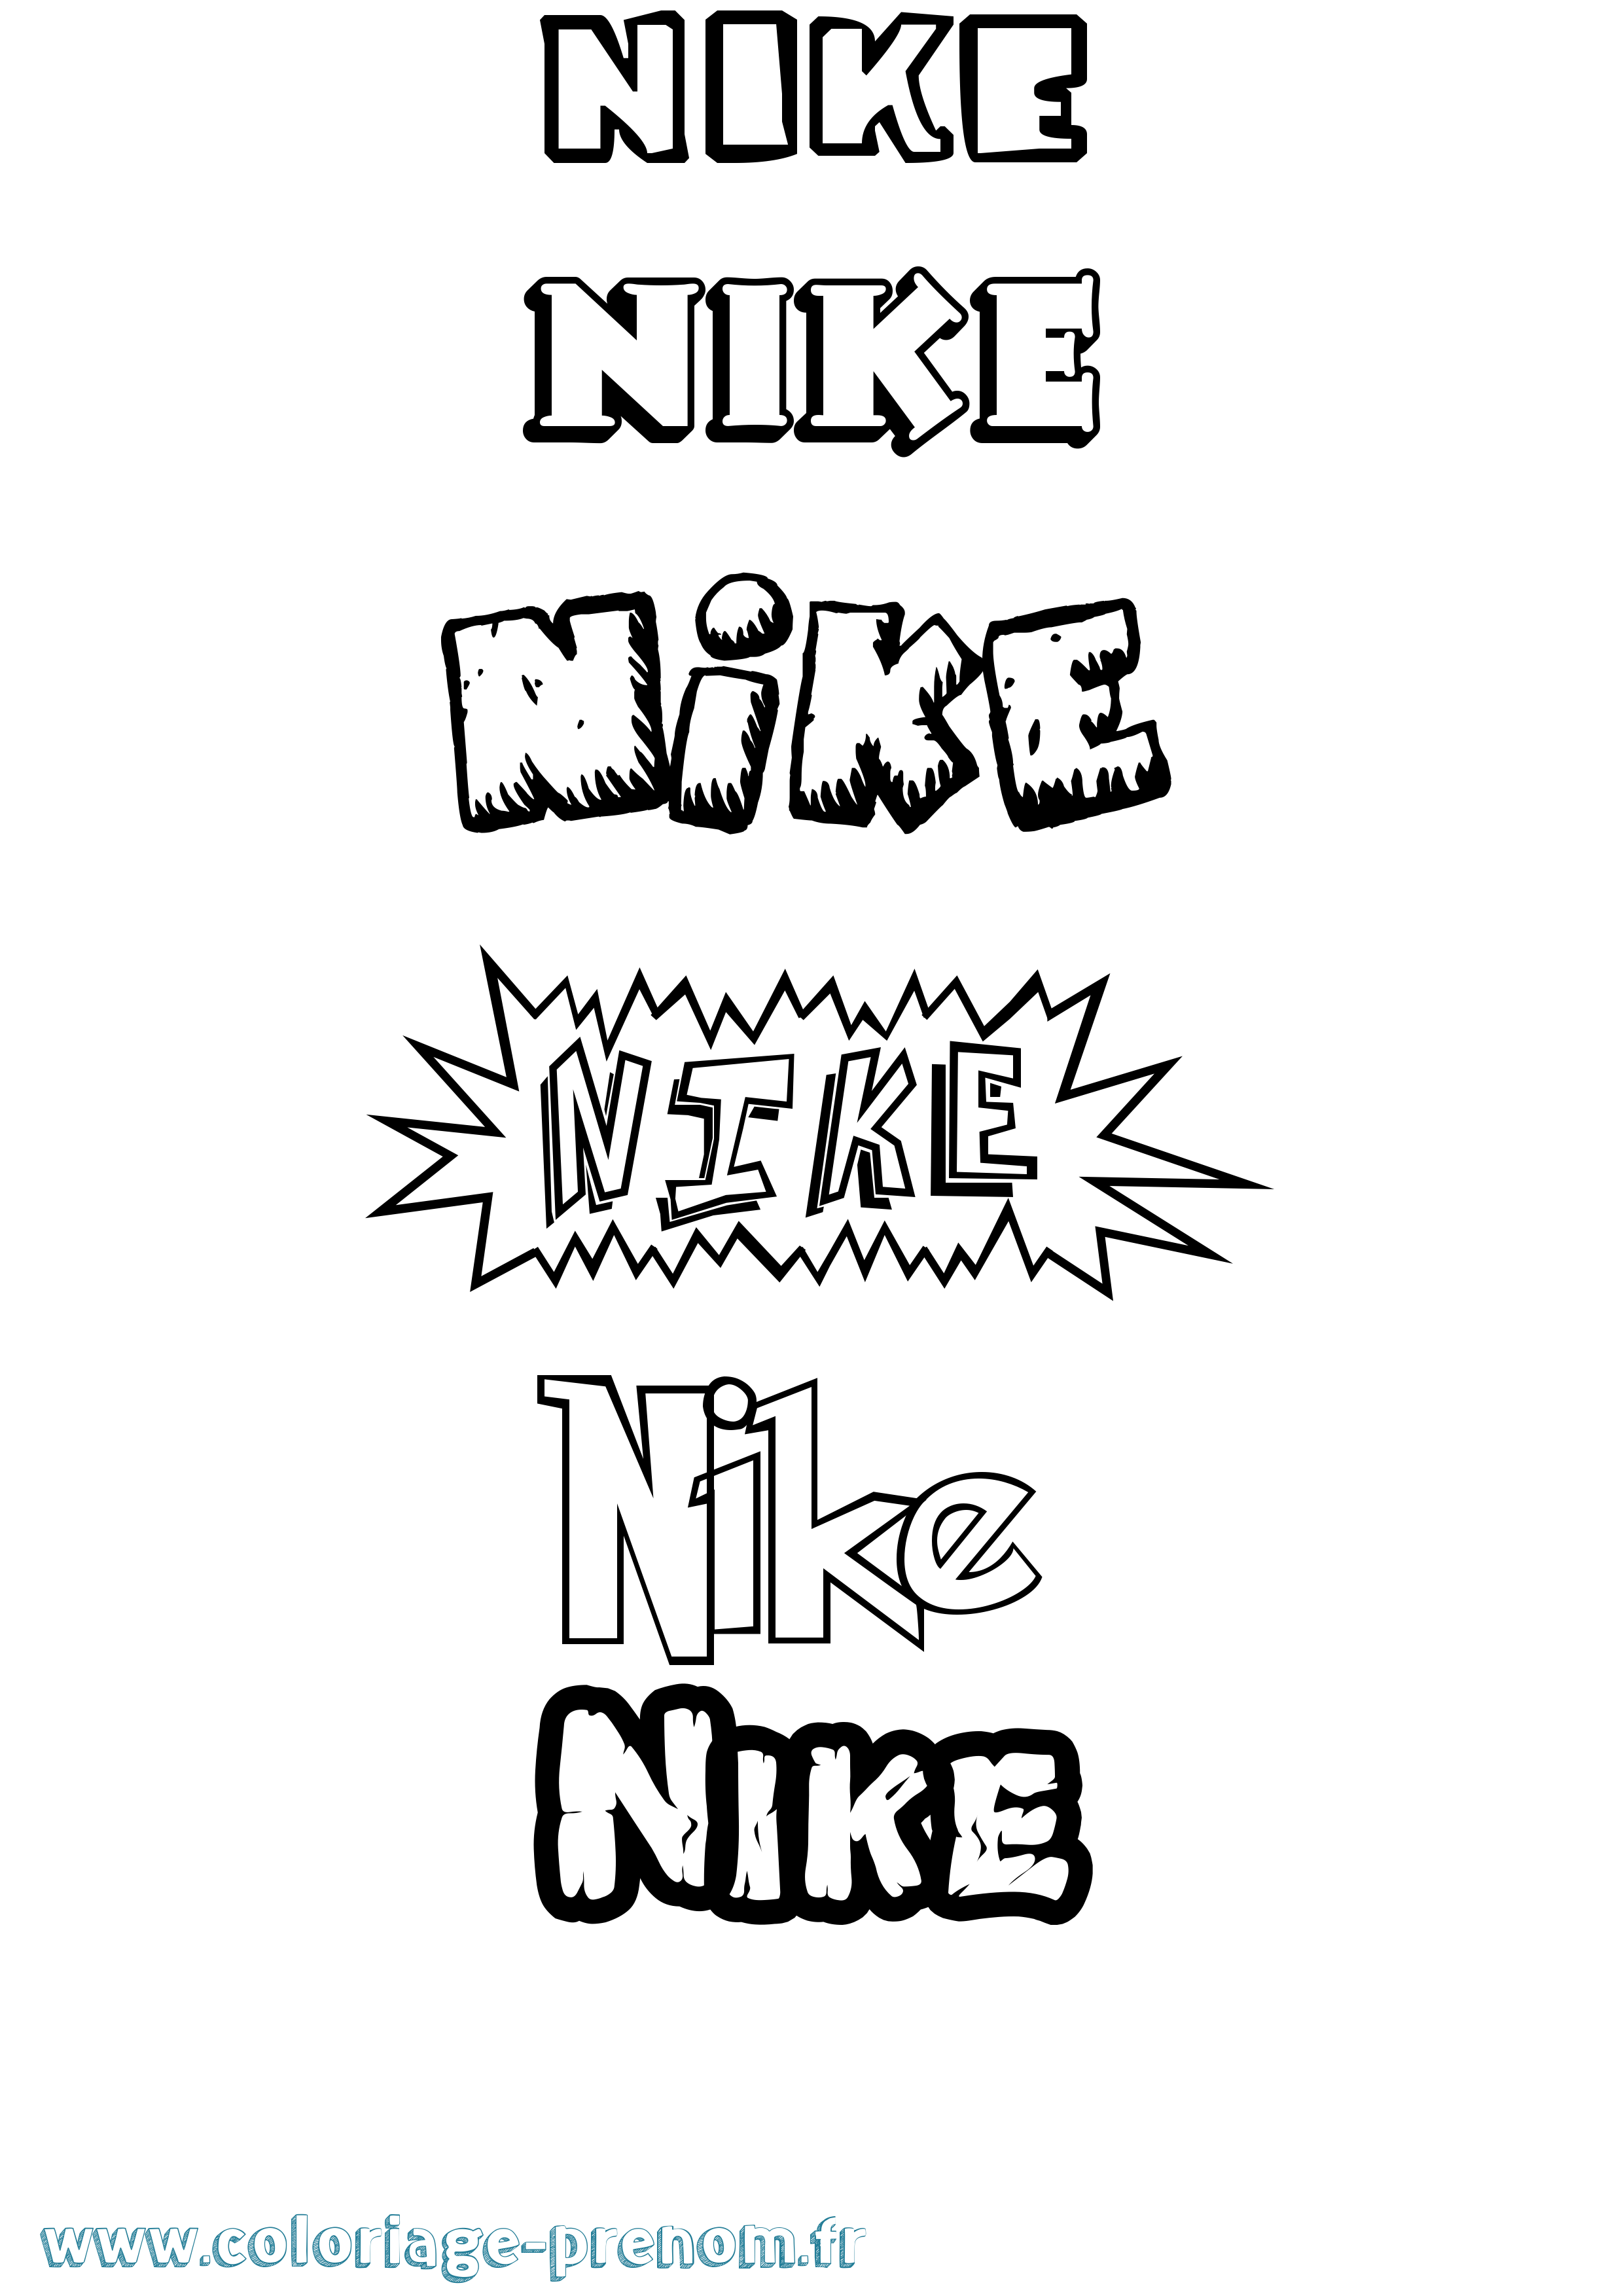 Coloriage prénom Nike